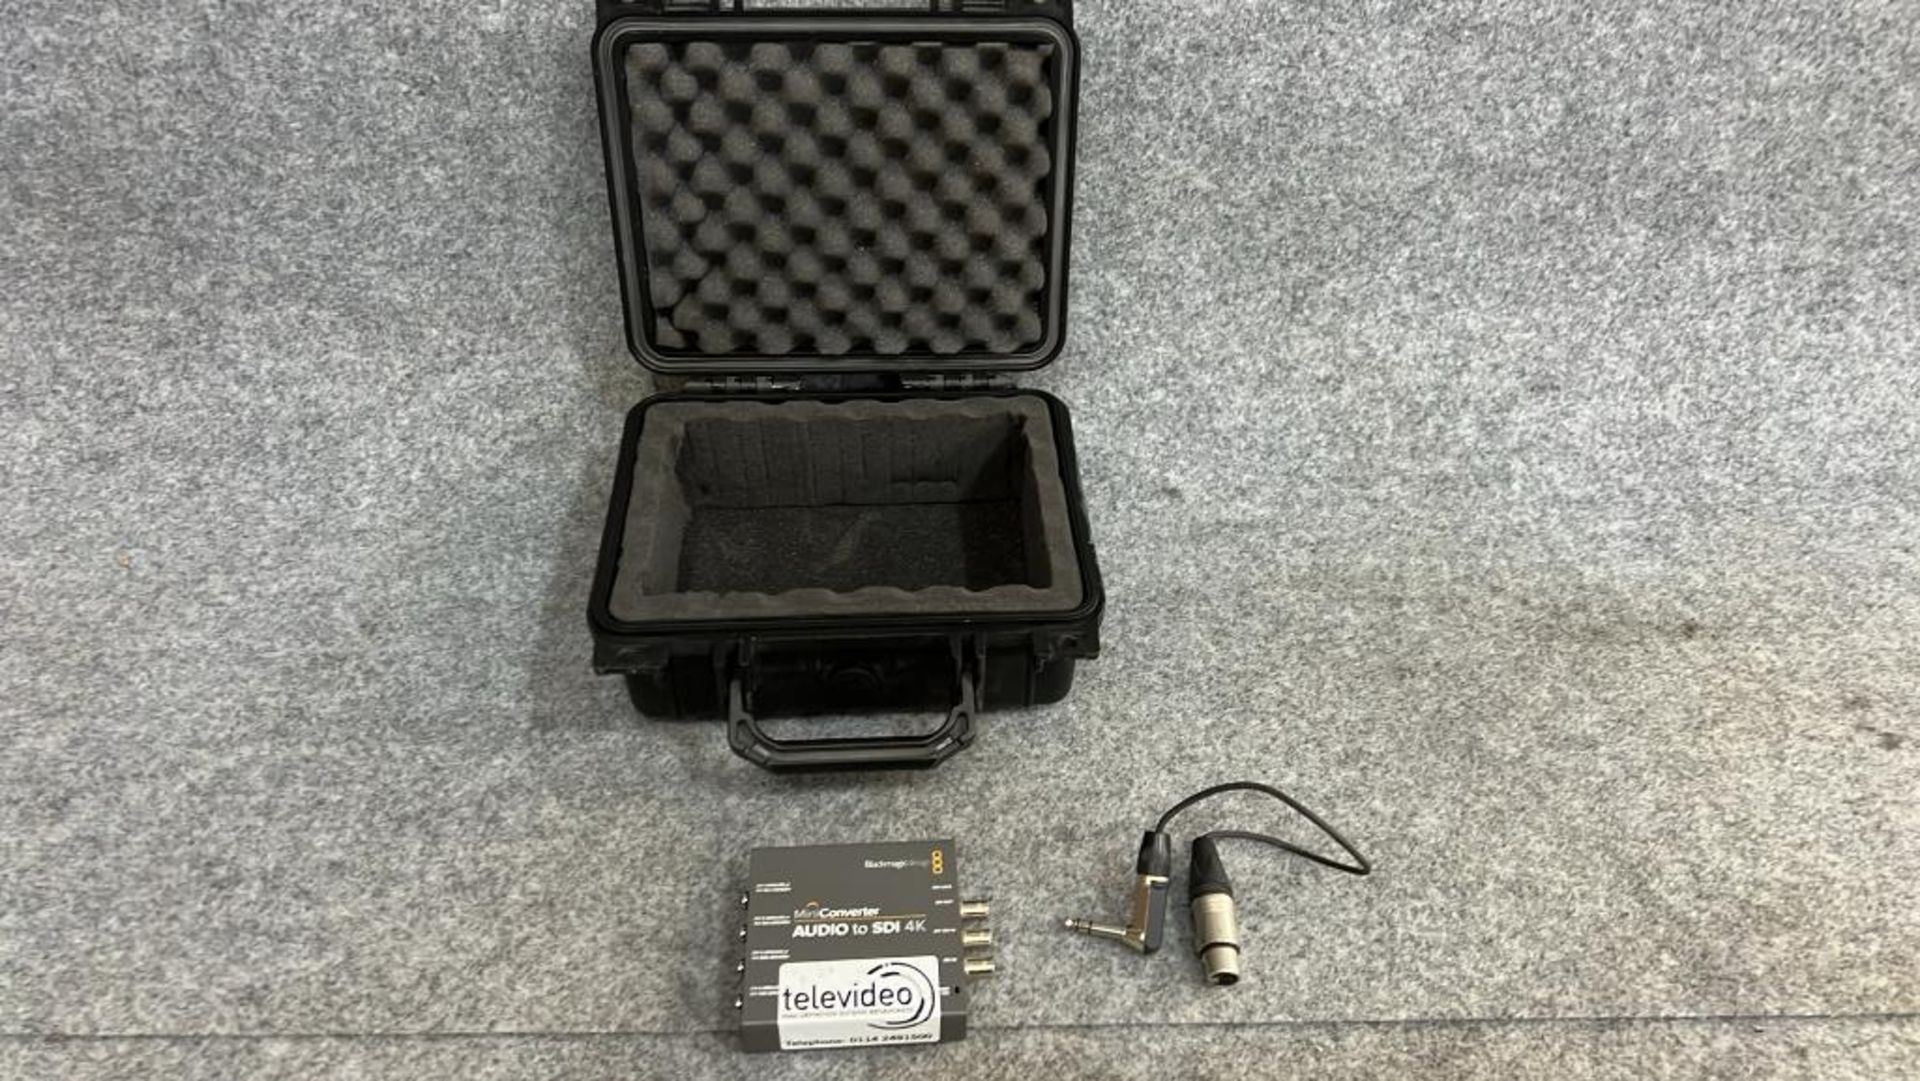 Black magic mini converter-Audio to SDI 4k contained in small plastic flight case with lead Blackmag